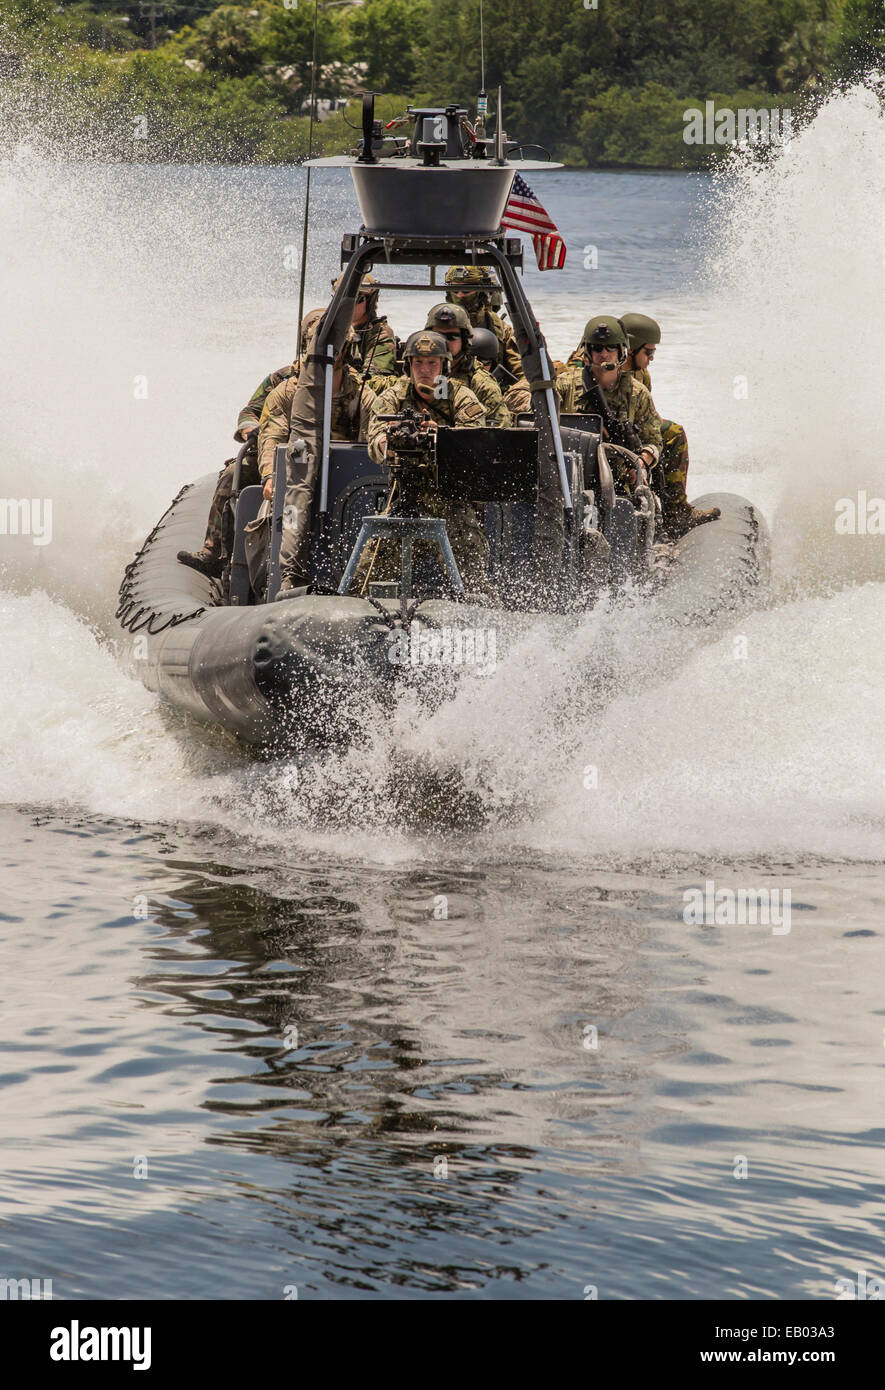 Seal Team RIB landing craft (SOFIC 2014) during an insertion demo in Tampa, Fl's Hillsborough River. Stock Photo